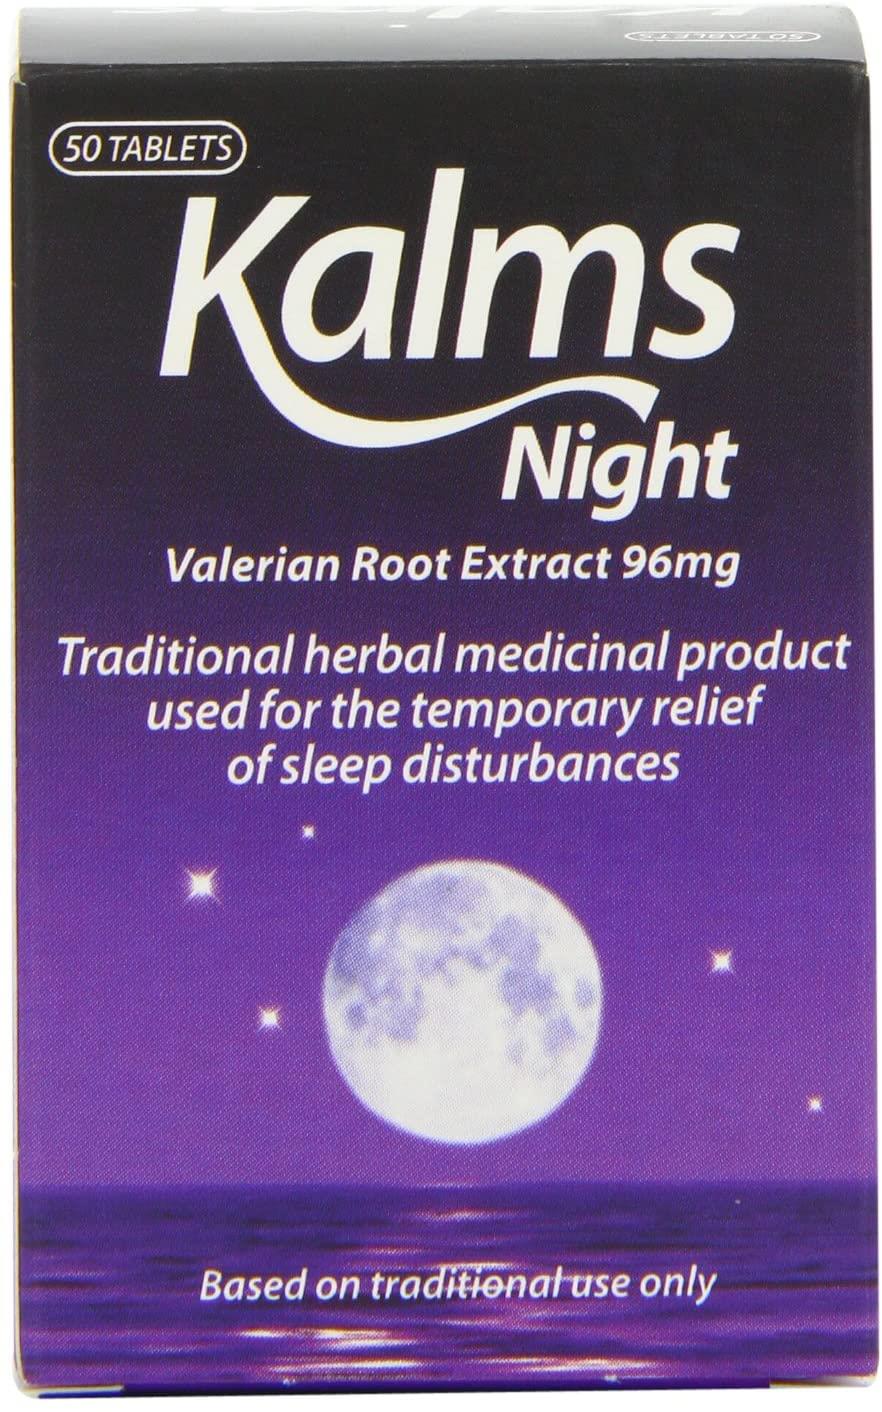 Kalms Night 50 Tablets Image